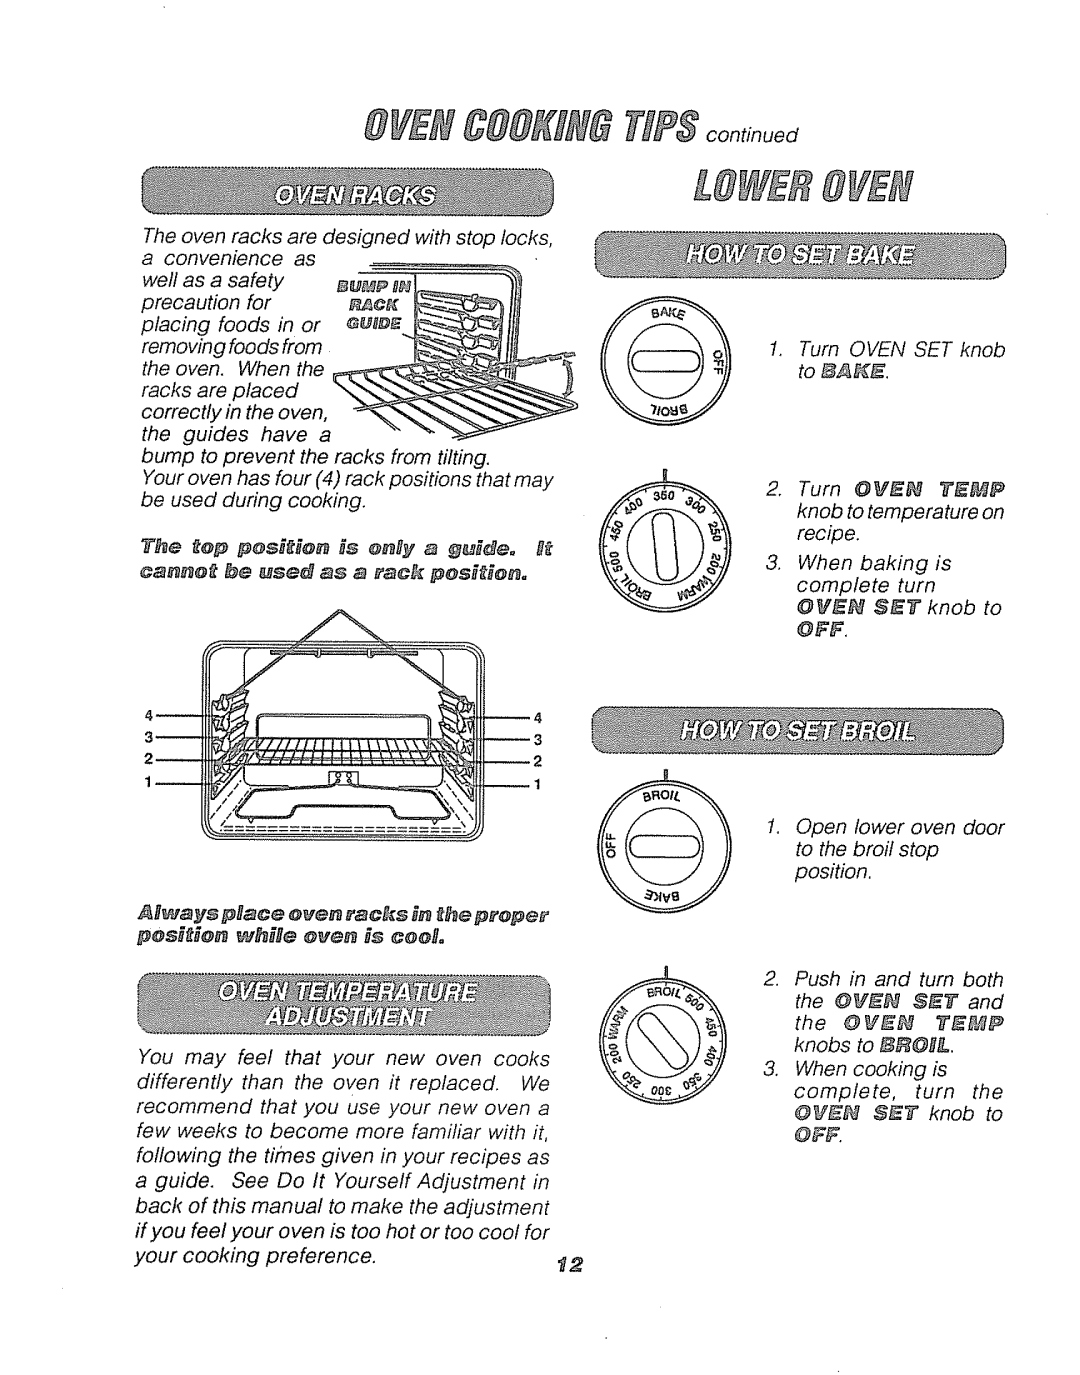 Sears 911.41369 manual The oven racks are designed with stop locks, Turn OV£@J _£MF knob to temperature on recipe 